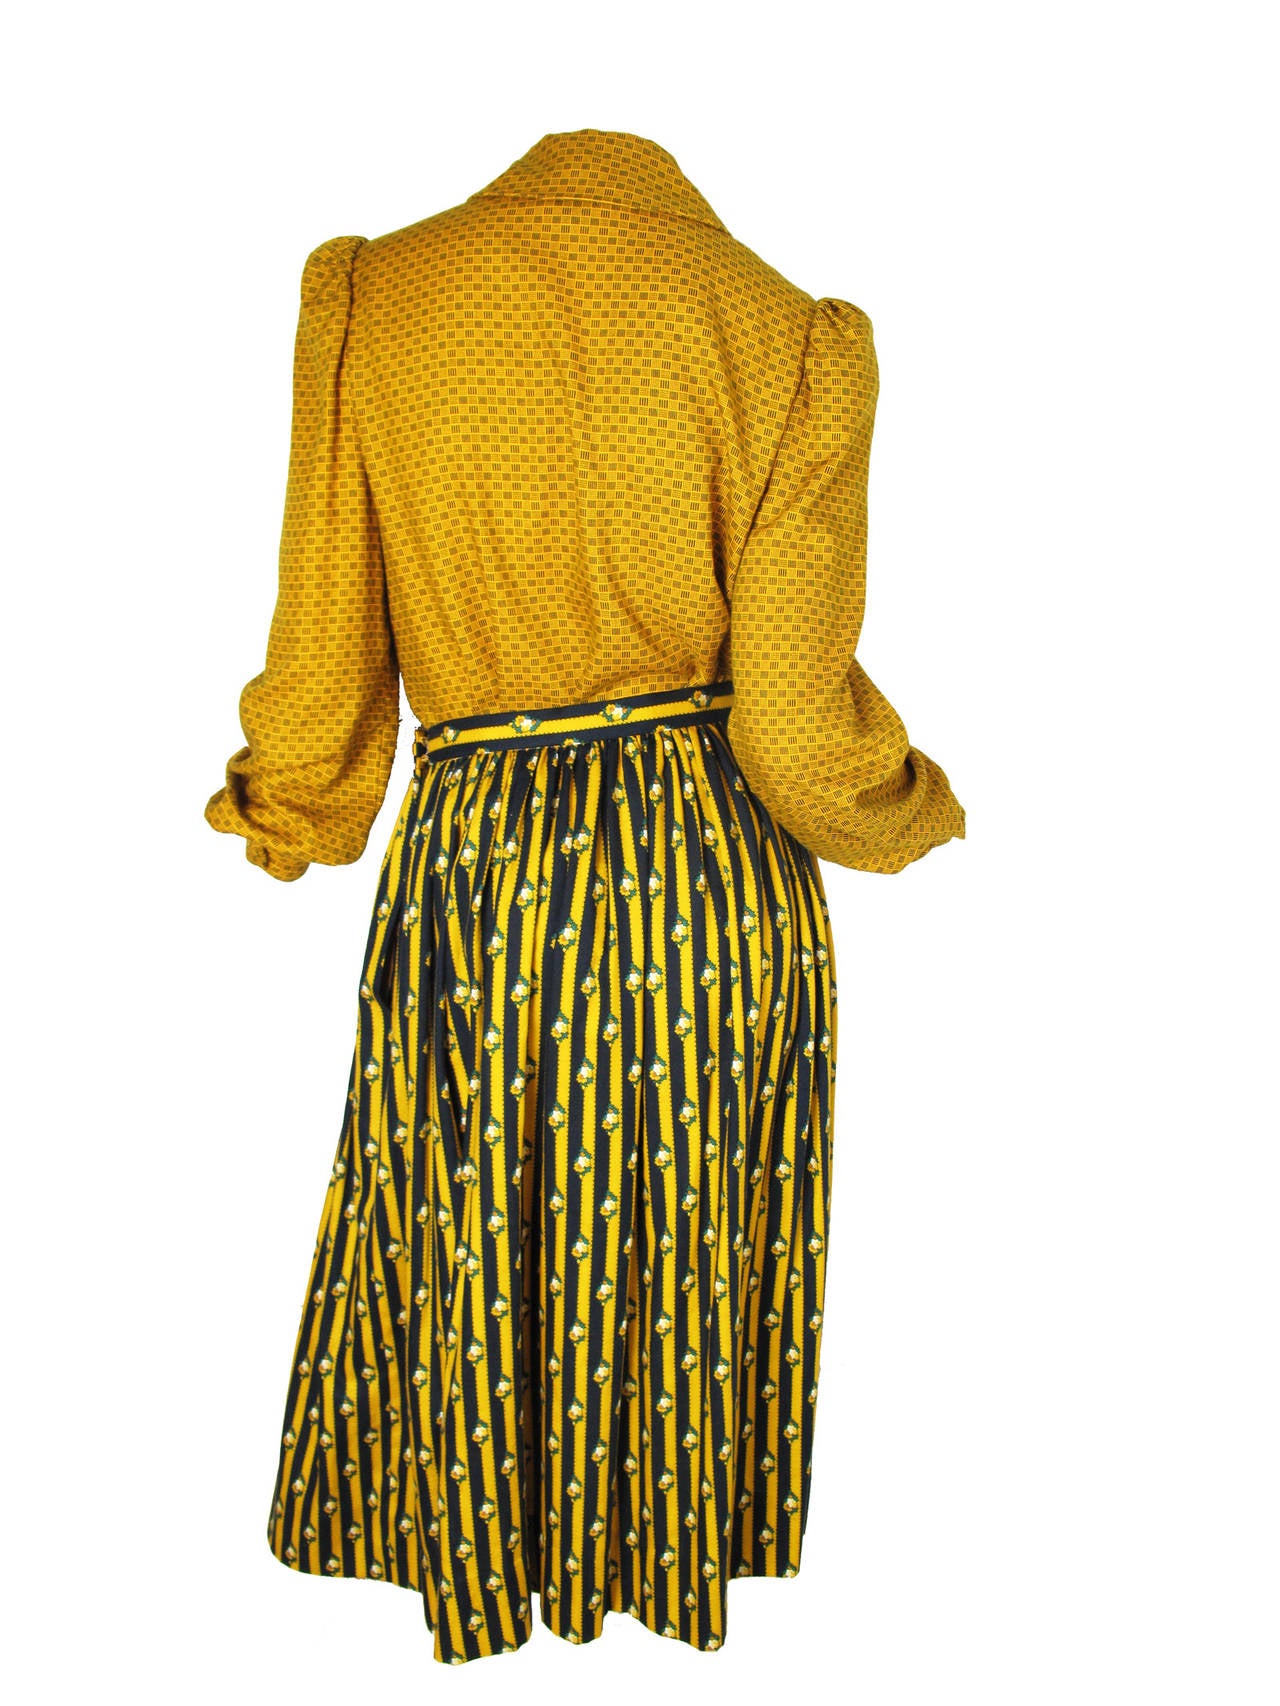 Yellow Oscar de la Renta blouse and floral skirt